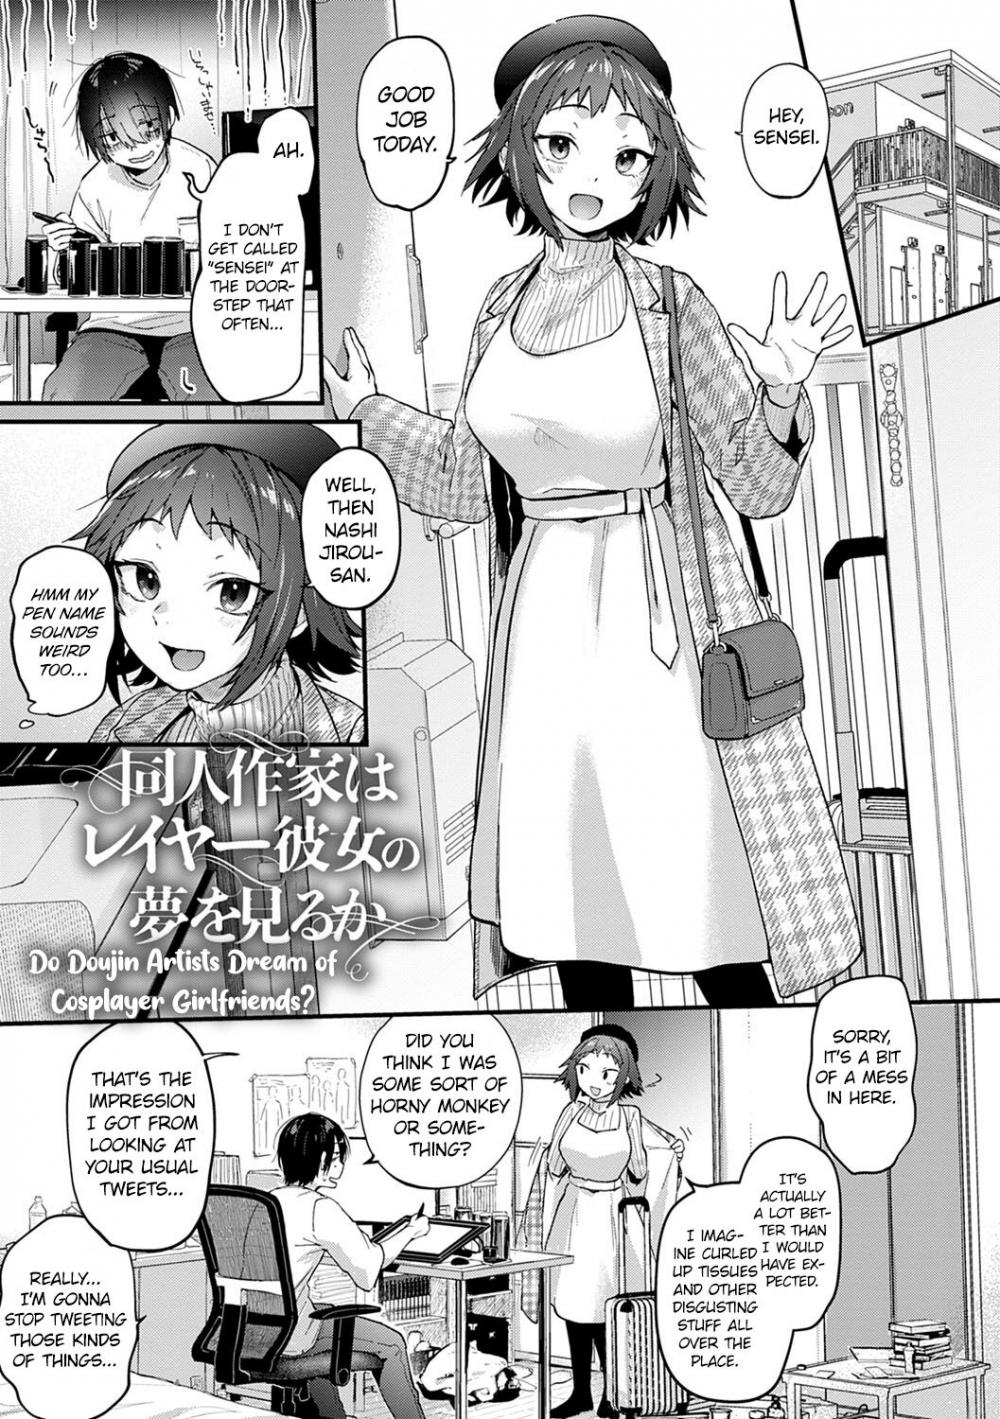 Hentai Manga Comic-Do Doujin Artists Dream of Cosplayer Girlfriends?-Read-1